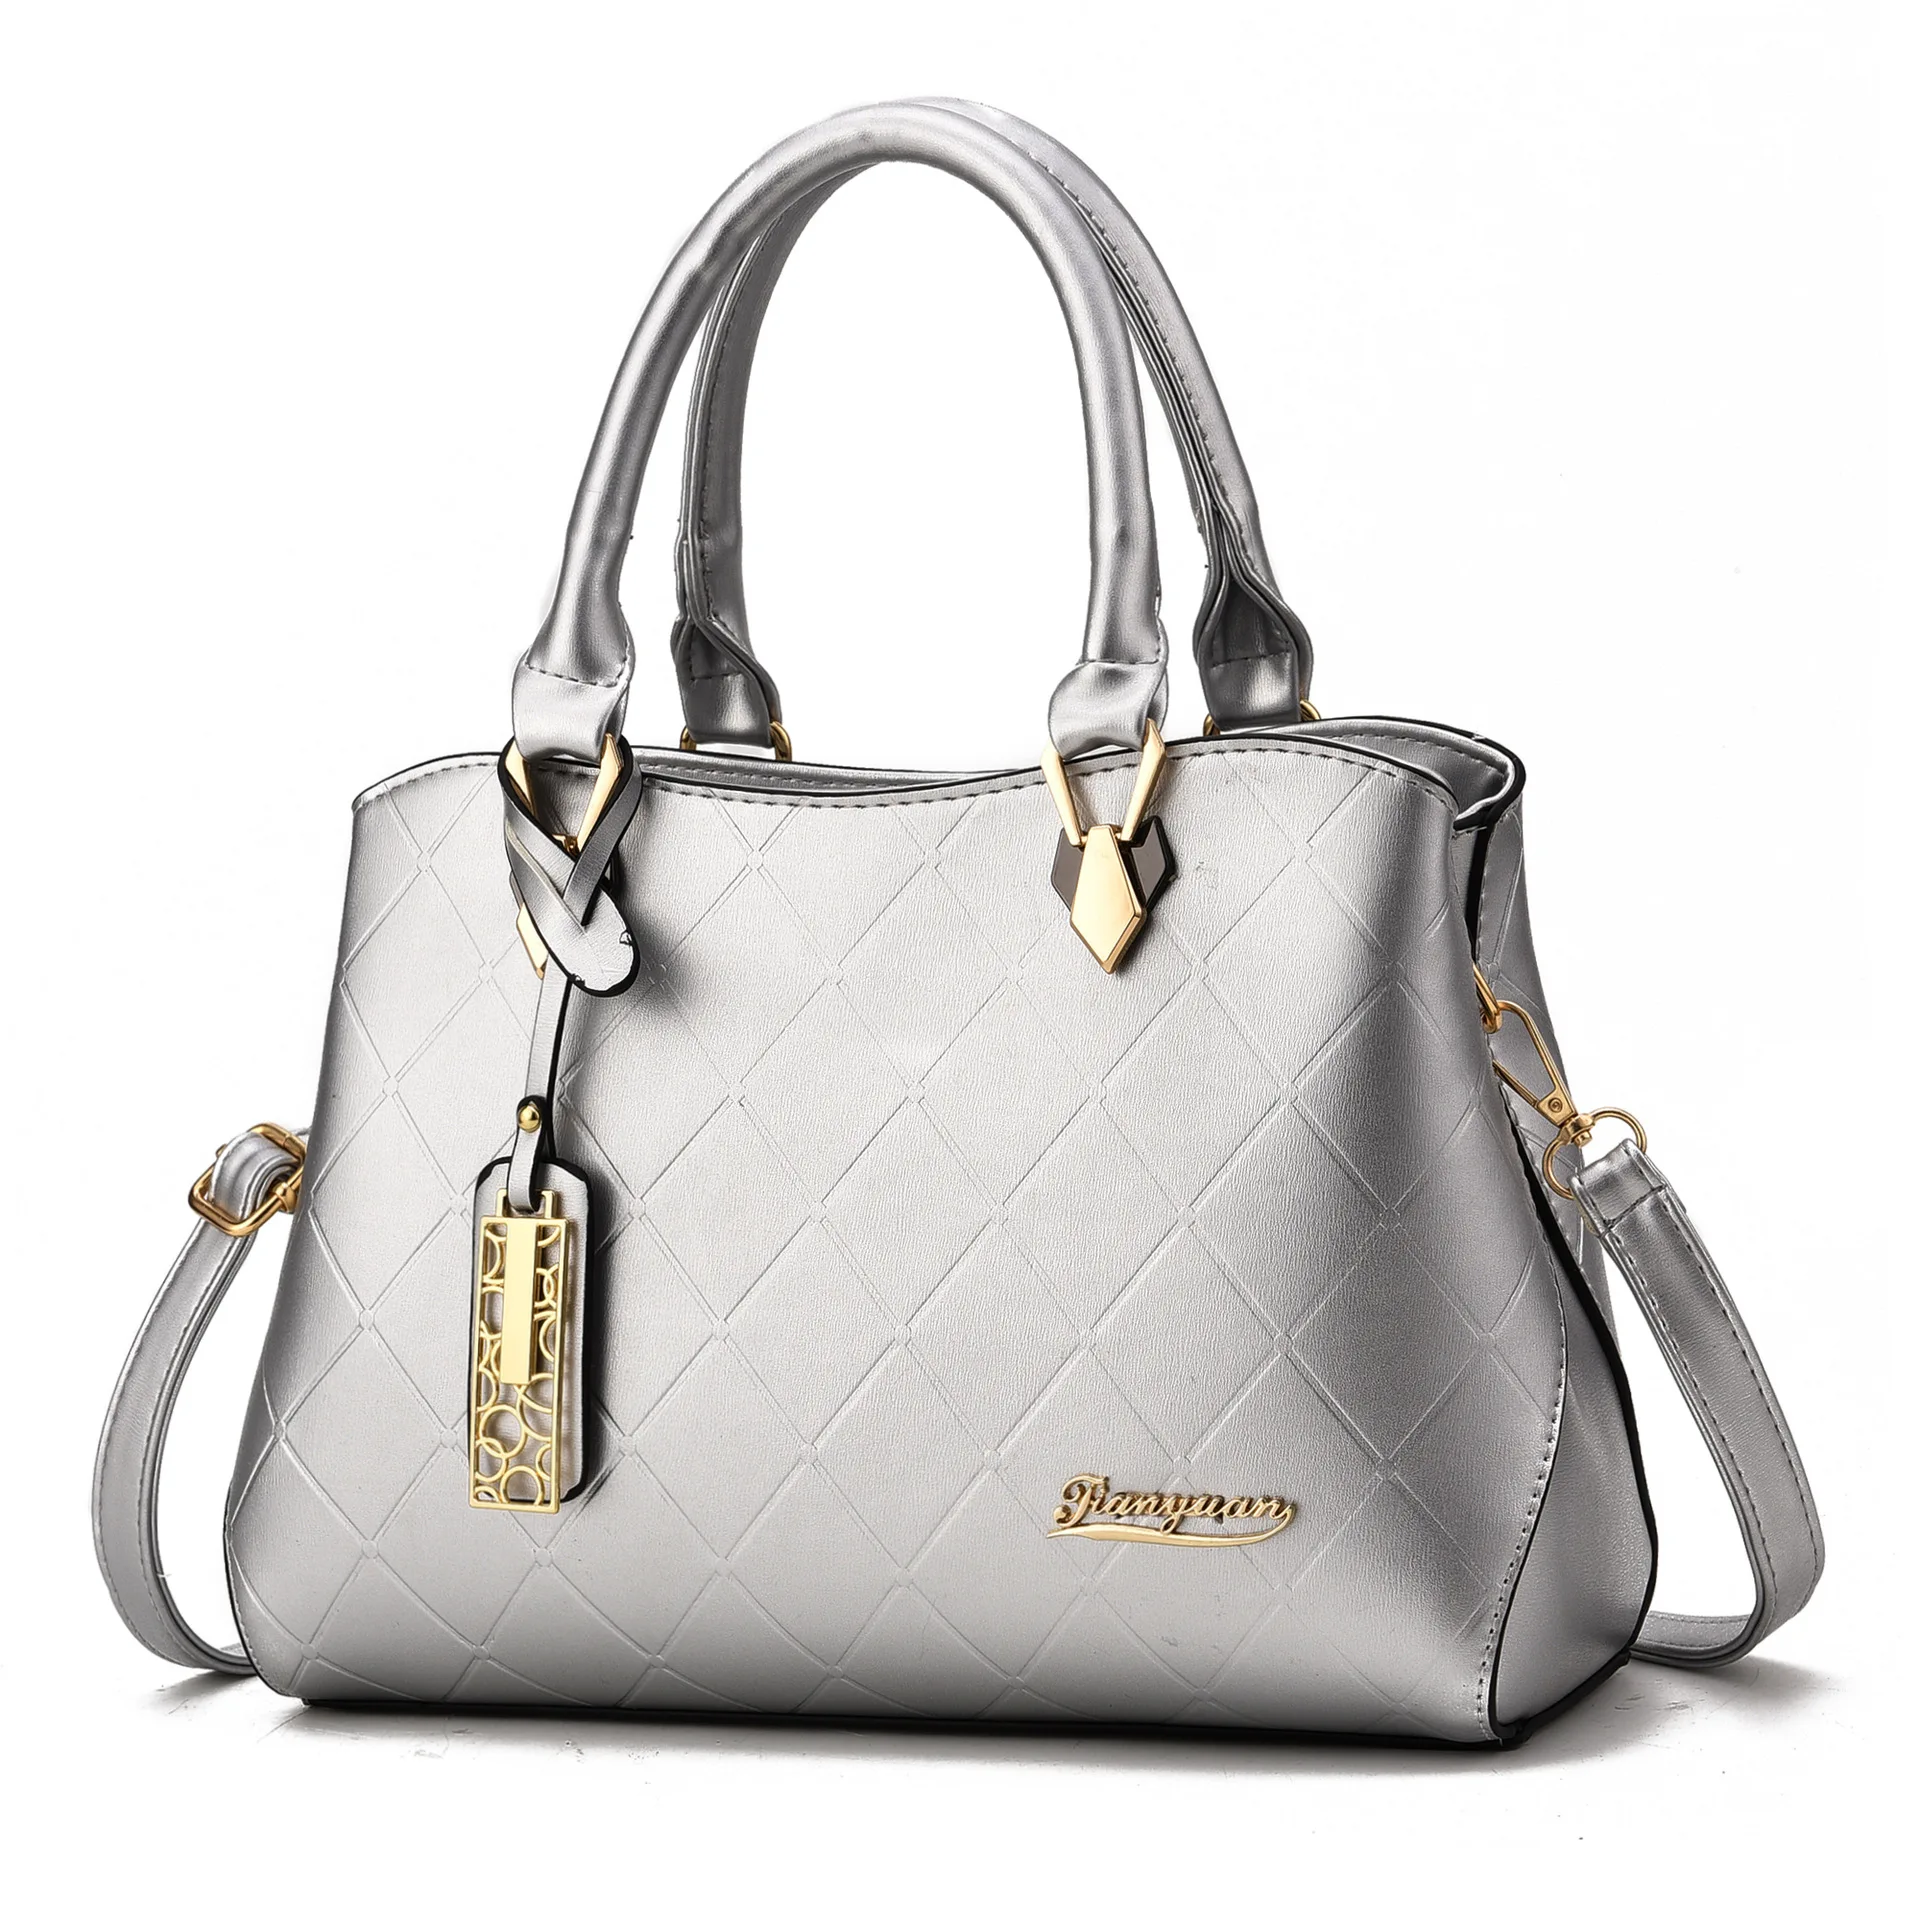 women bag Fashion Casual women's handbags Luxury handbag Designer Shoulder bags new bags for women 2021 white Simulation leather 6